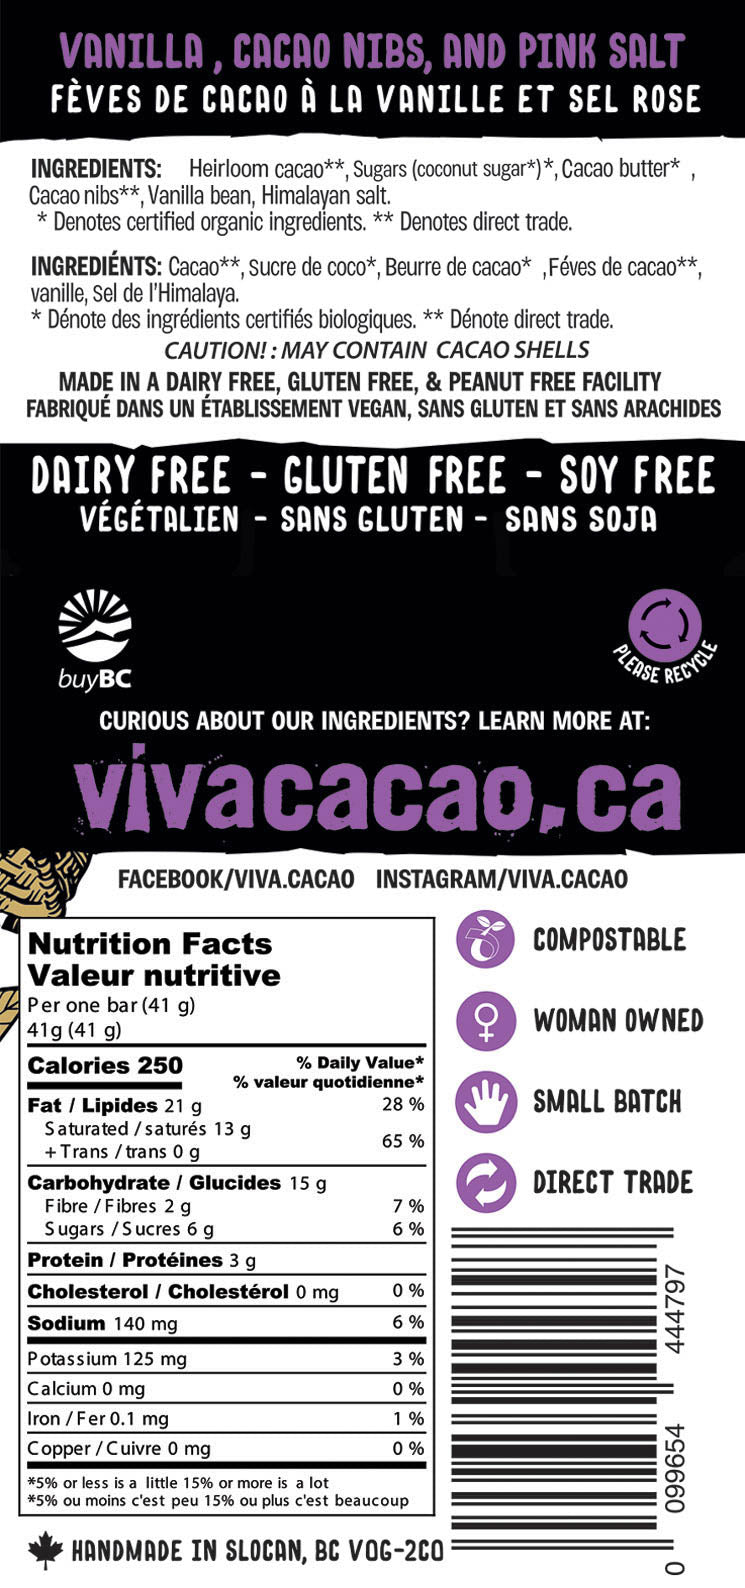 Dark Vanilla Salt with Nibs Chocolate Bar - VIVA CACAO!